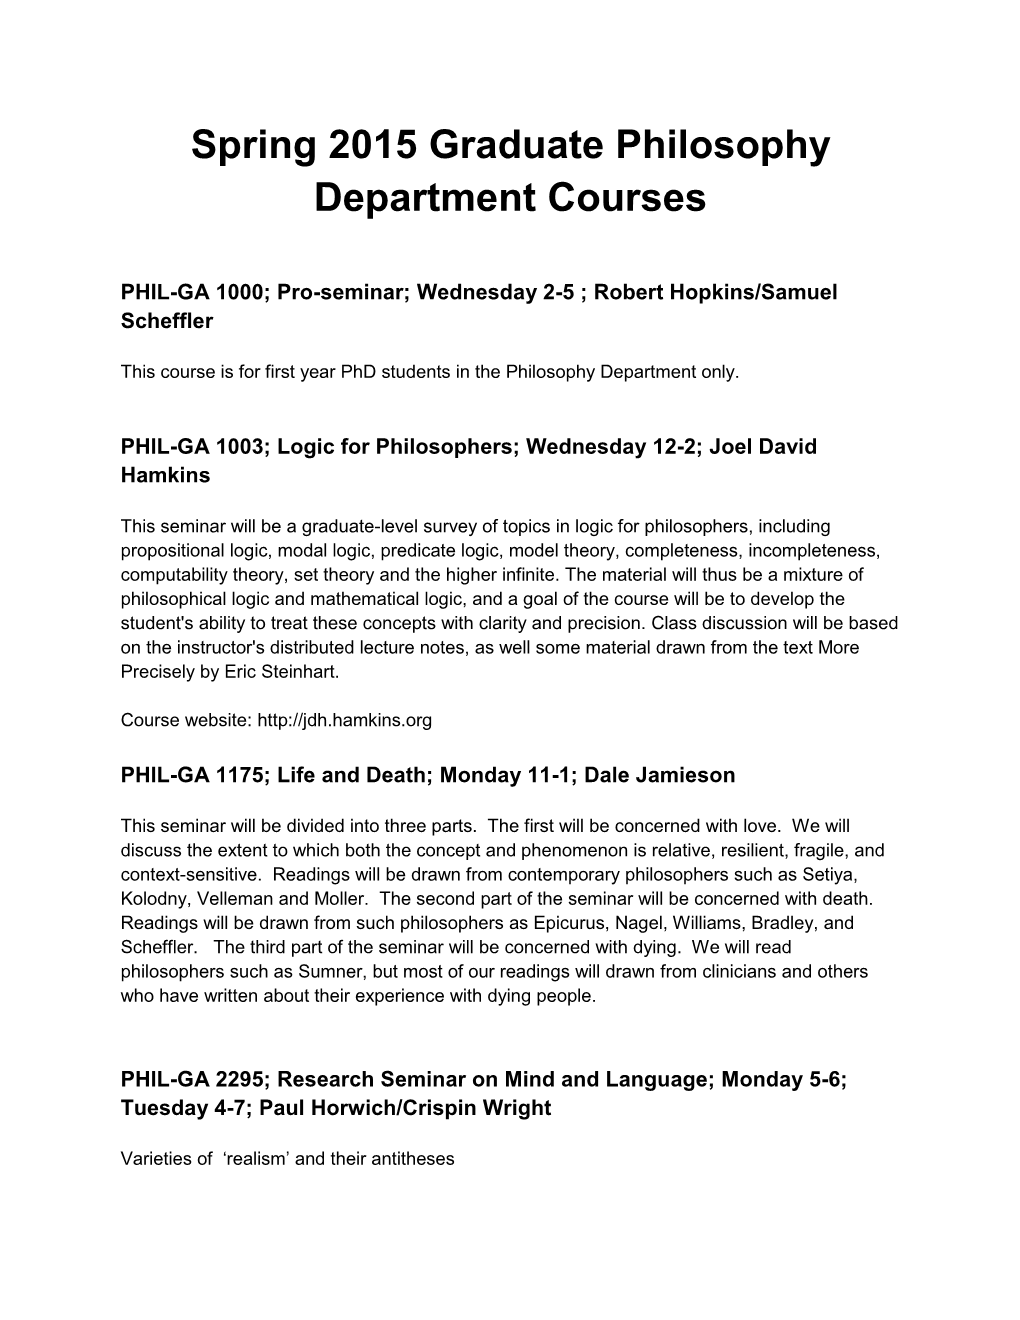 Spring 2015 Graduate Philosophy Department Courses